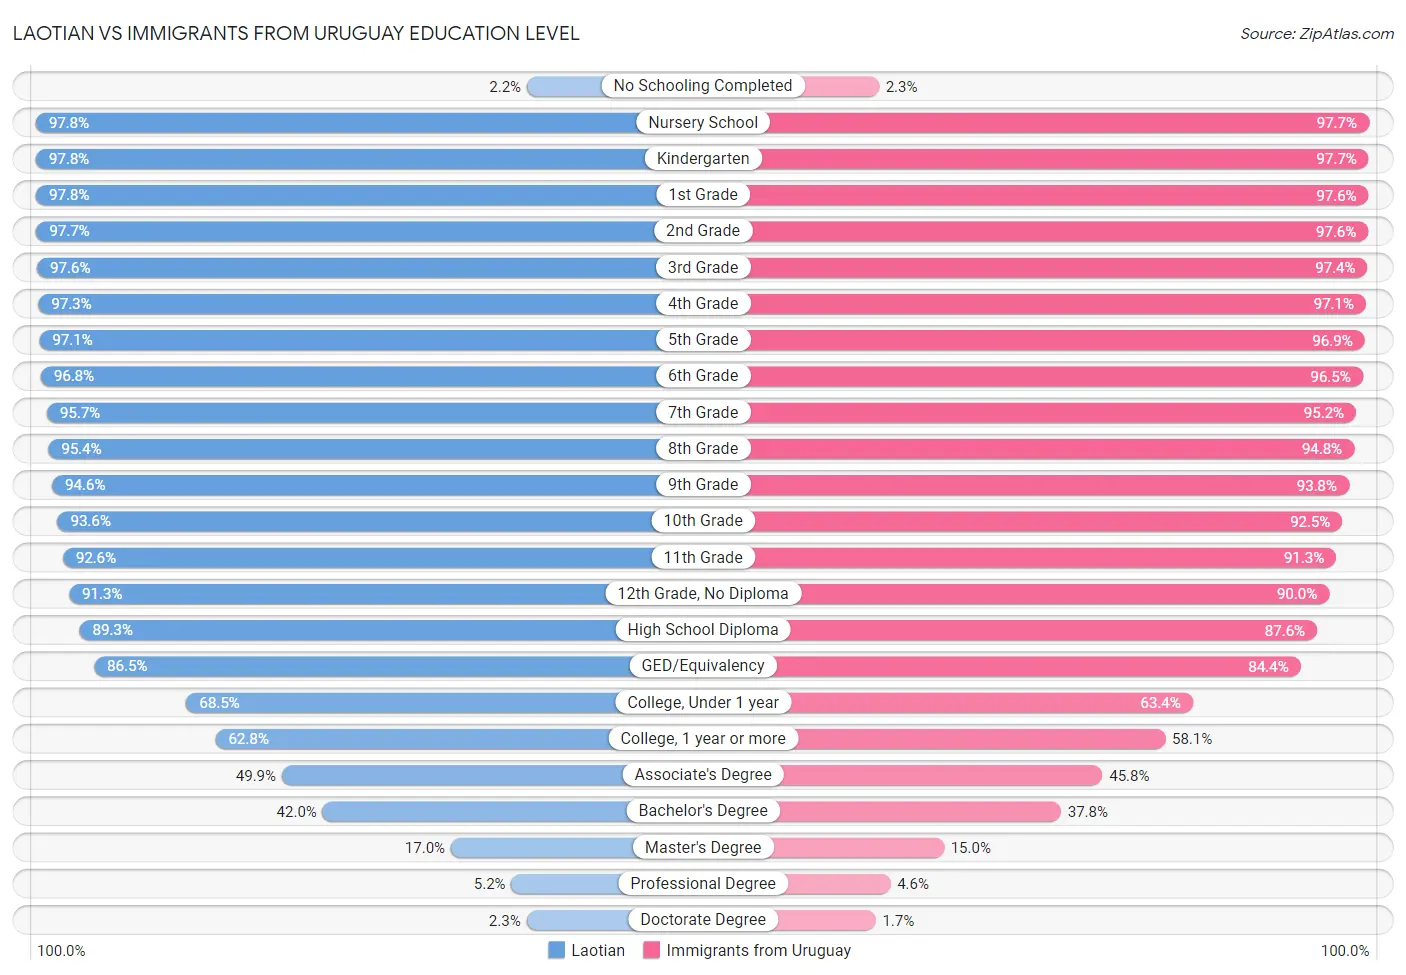 Laotian vs Immigrants from Uruguay Education Level